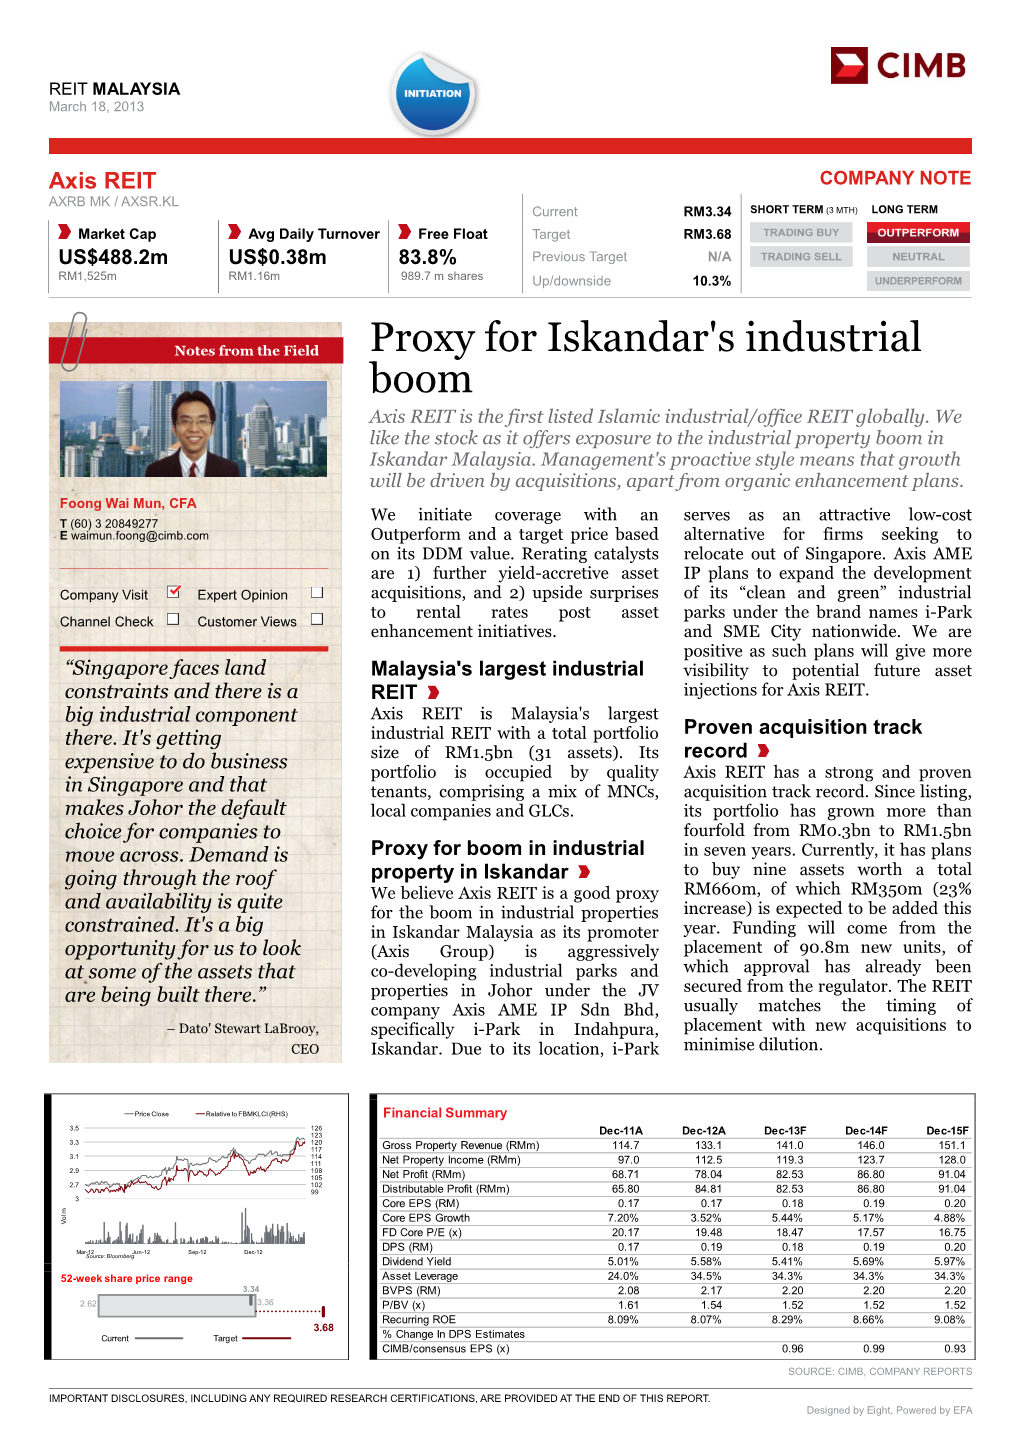 Proxy for Iskandar's Industrial Boom